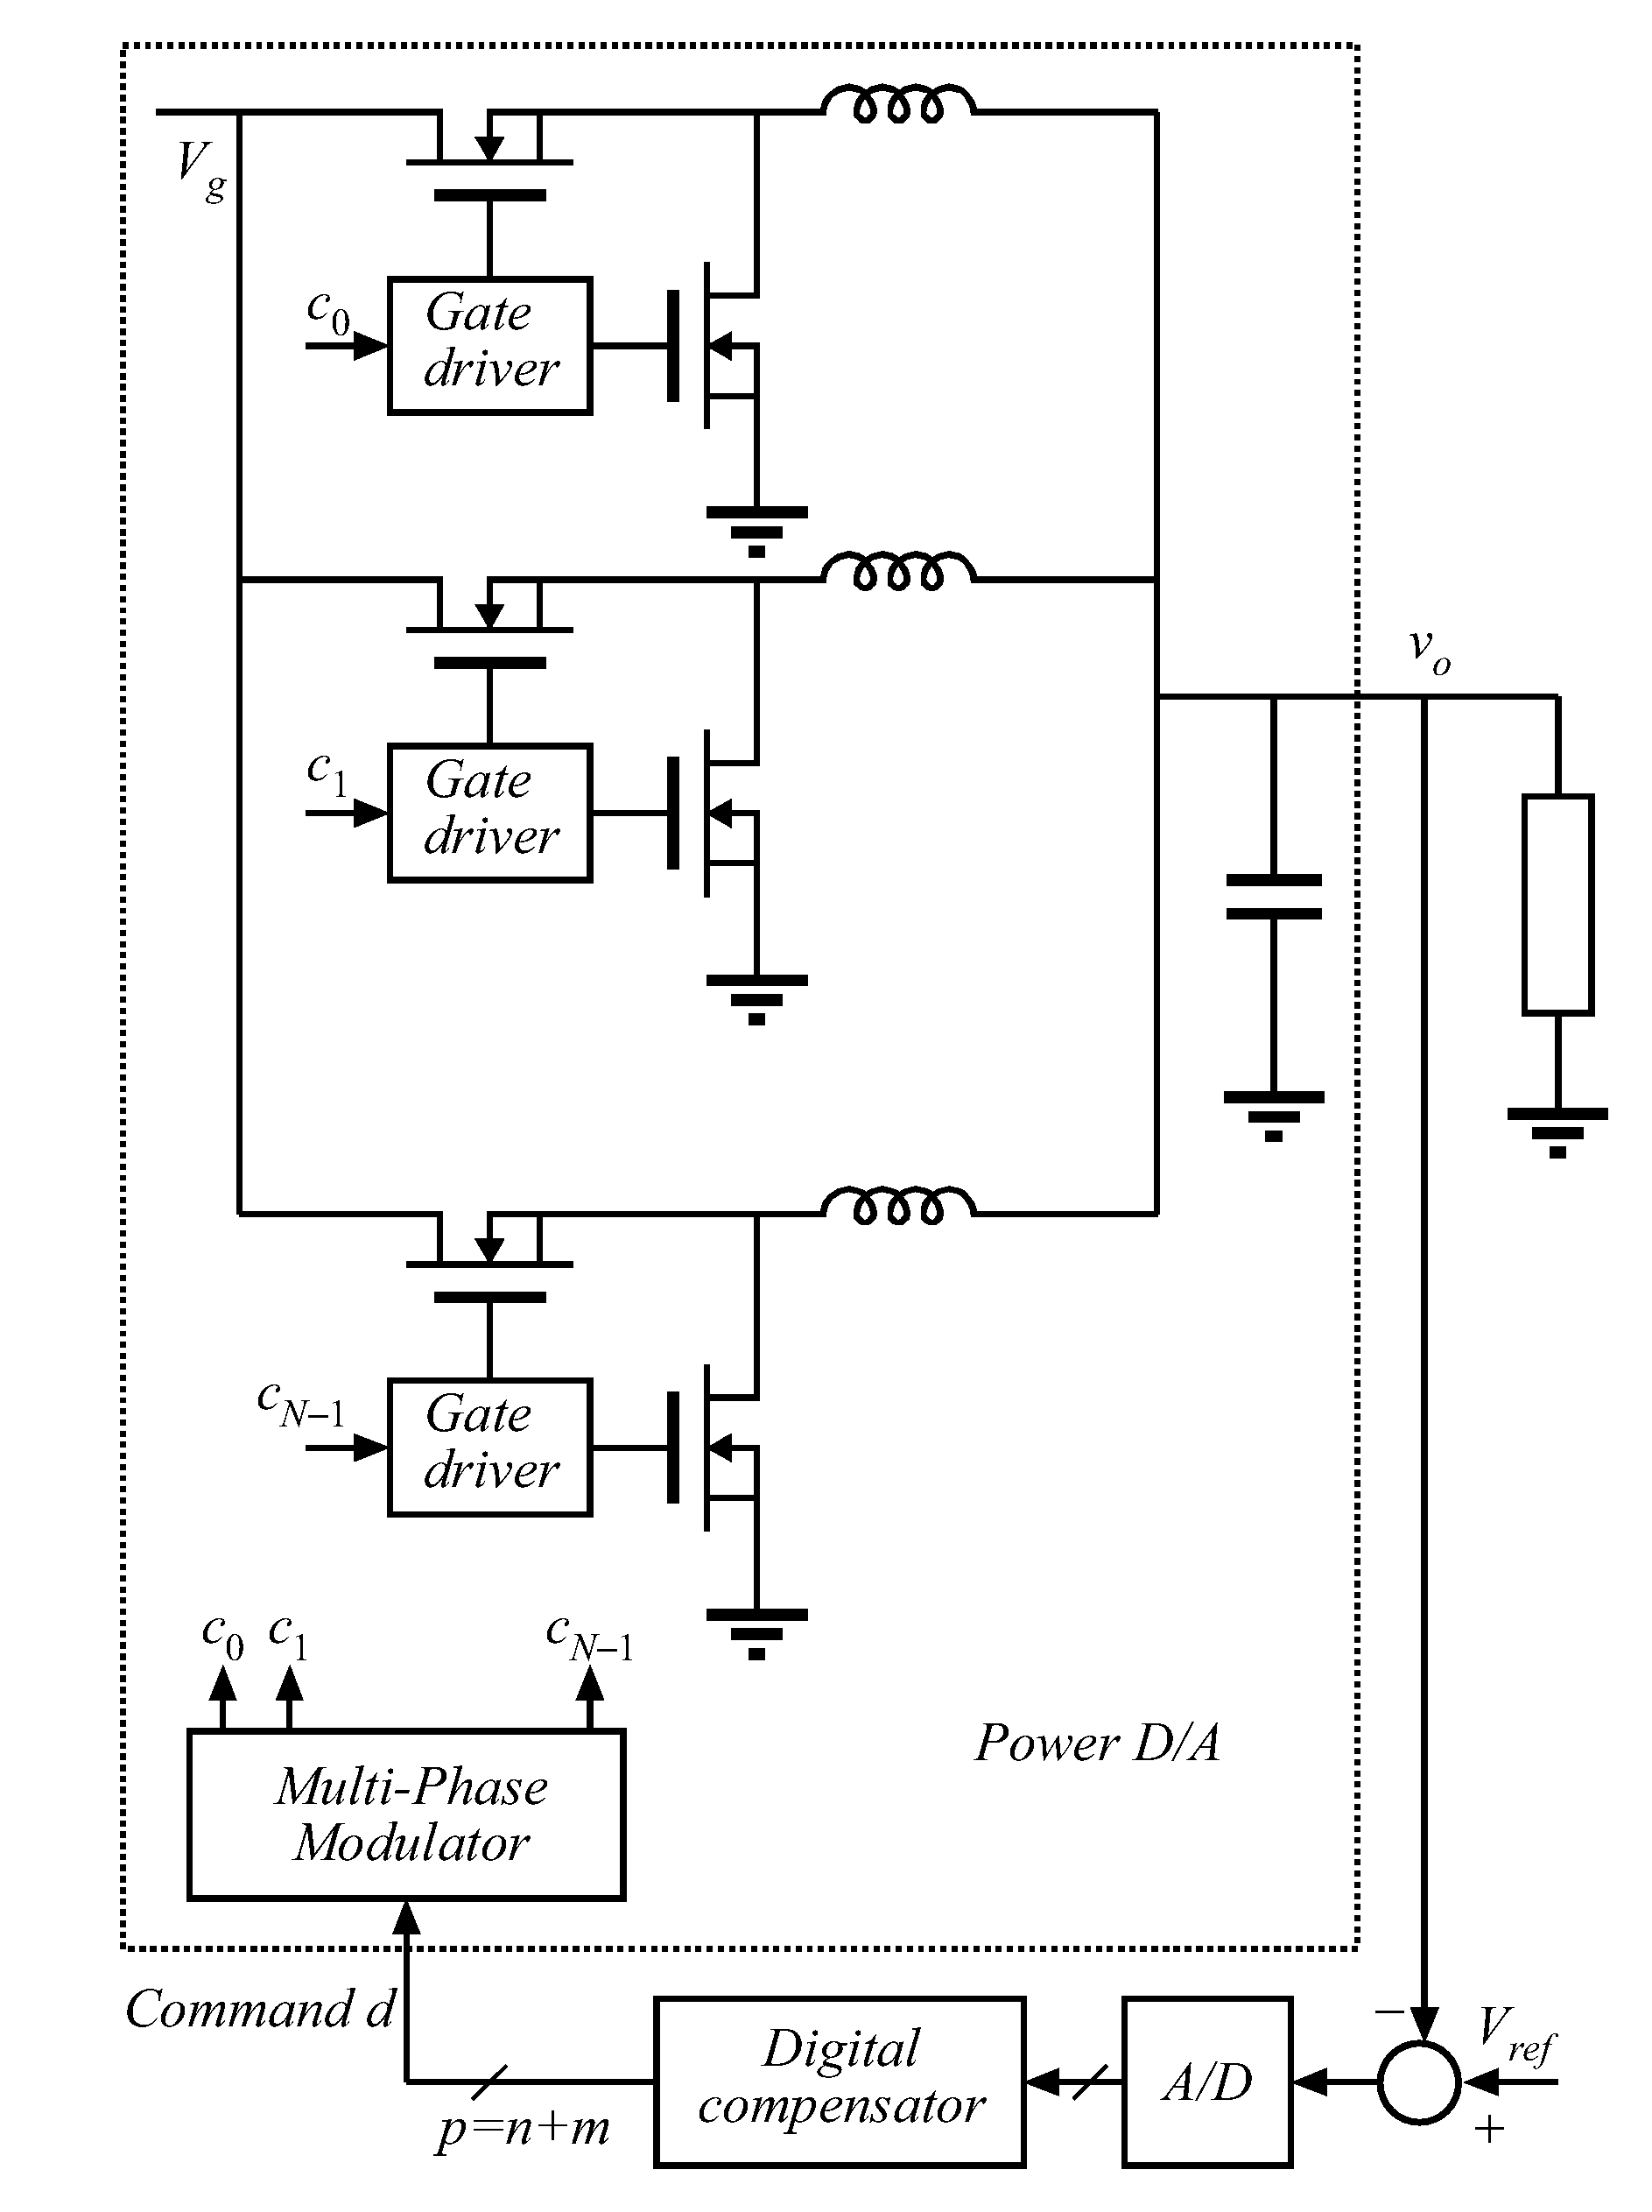 Multi-phase modulator